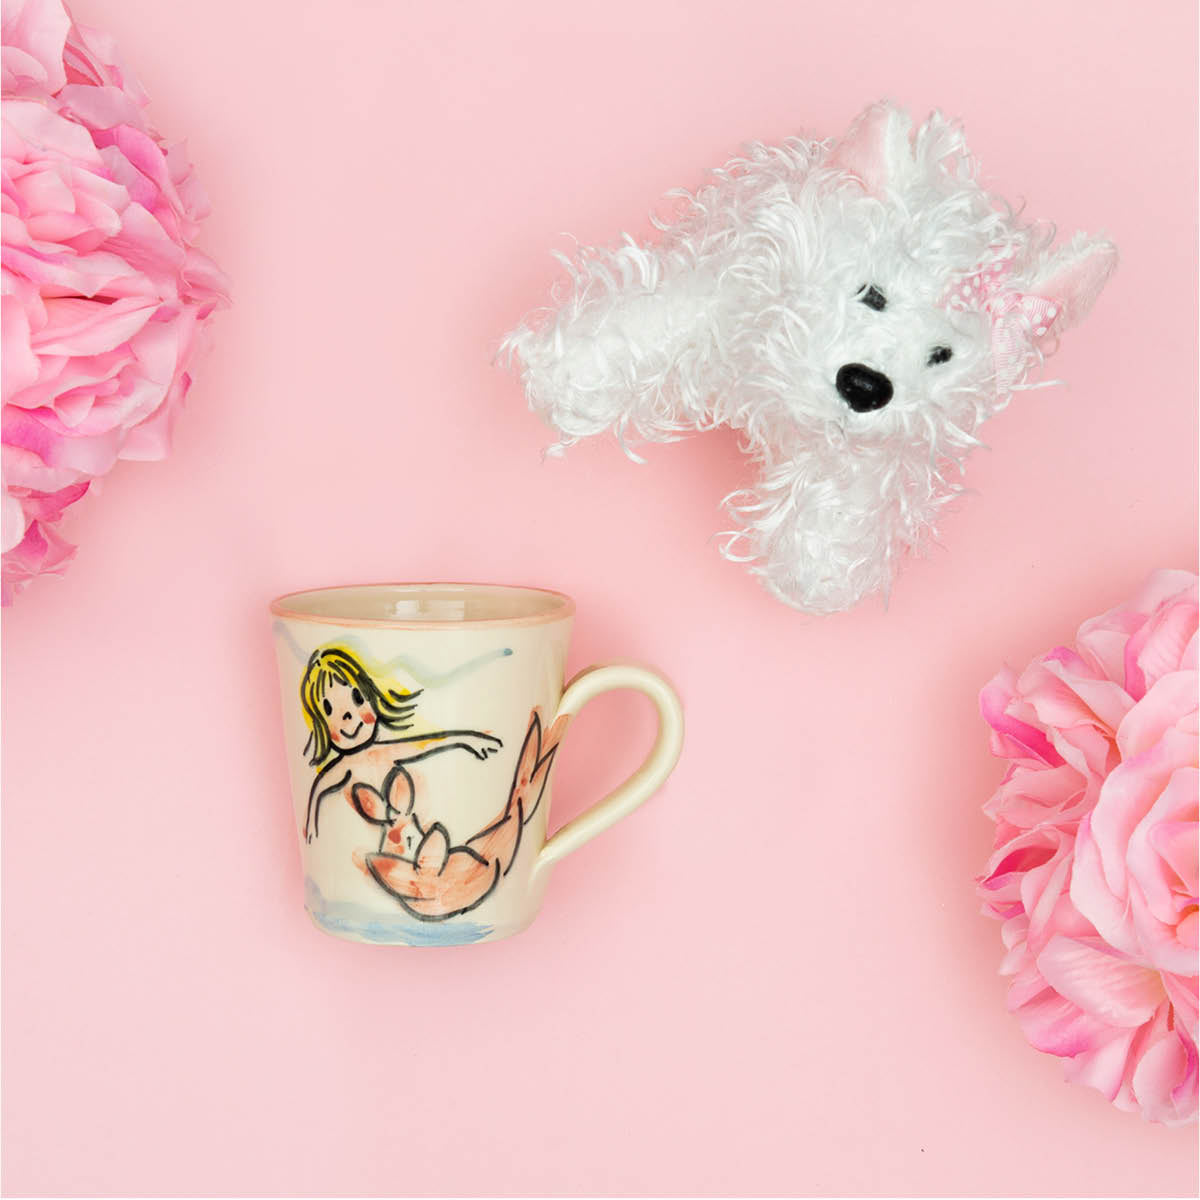 Mermaid Mug Gift Set with Puppy Terrier Plush 